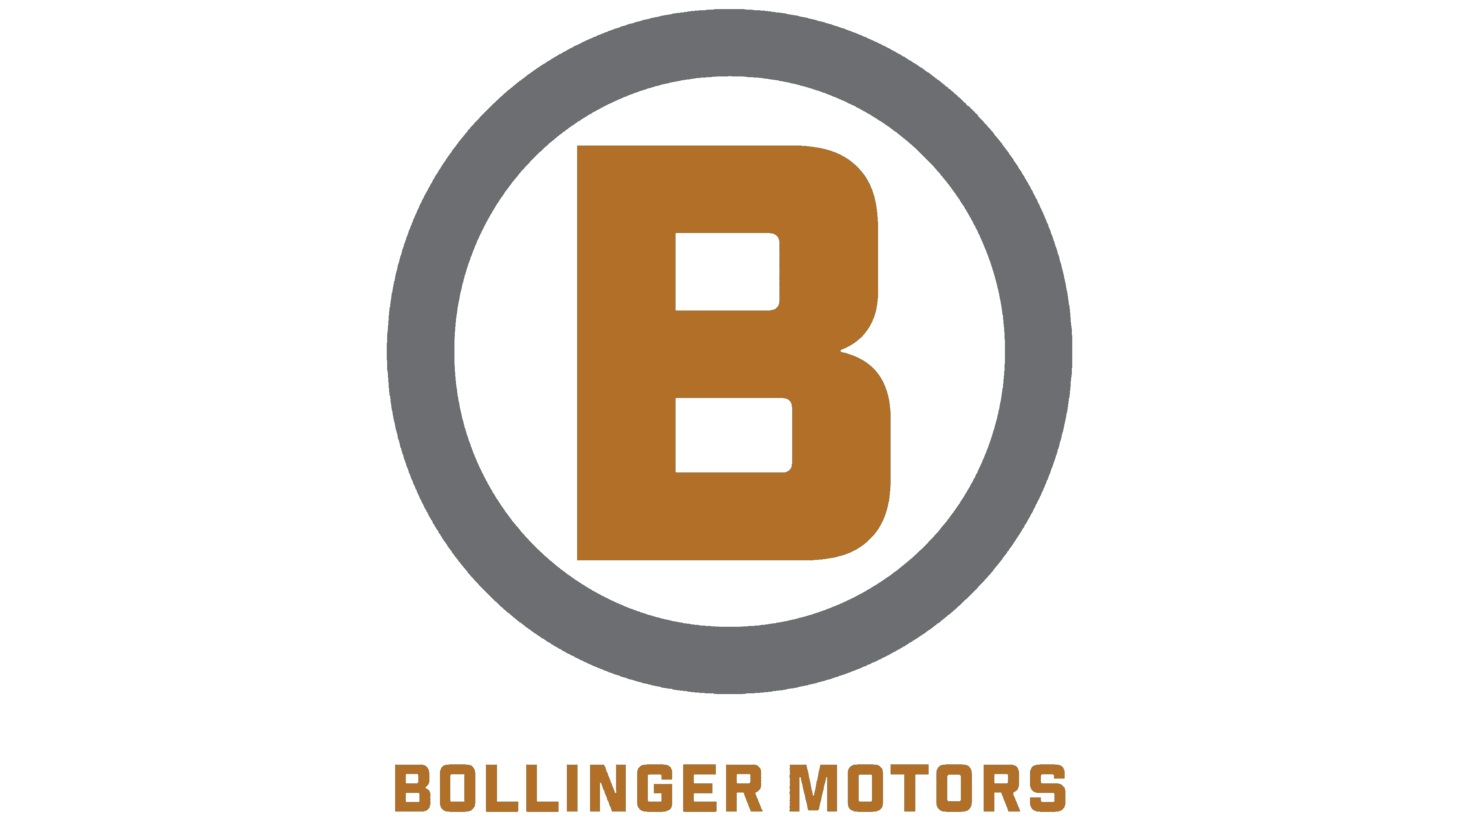 Bollinger motors sign